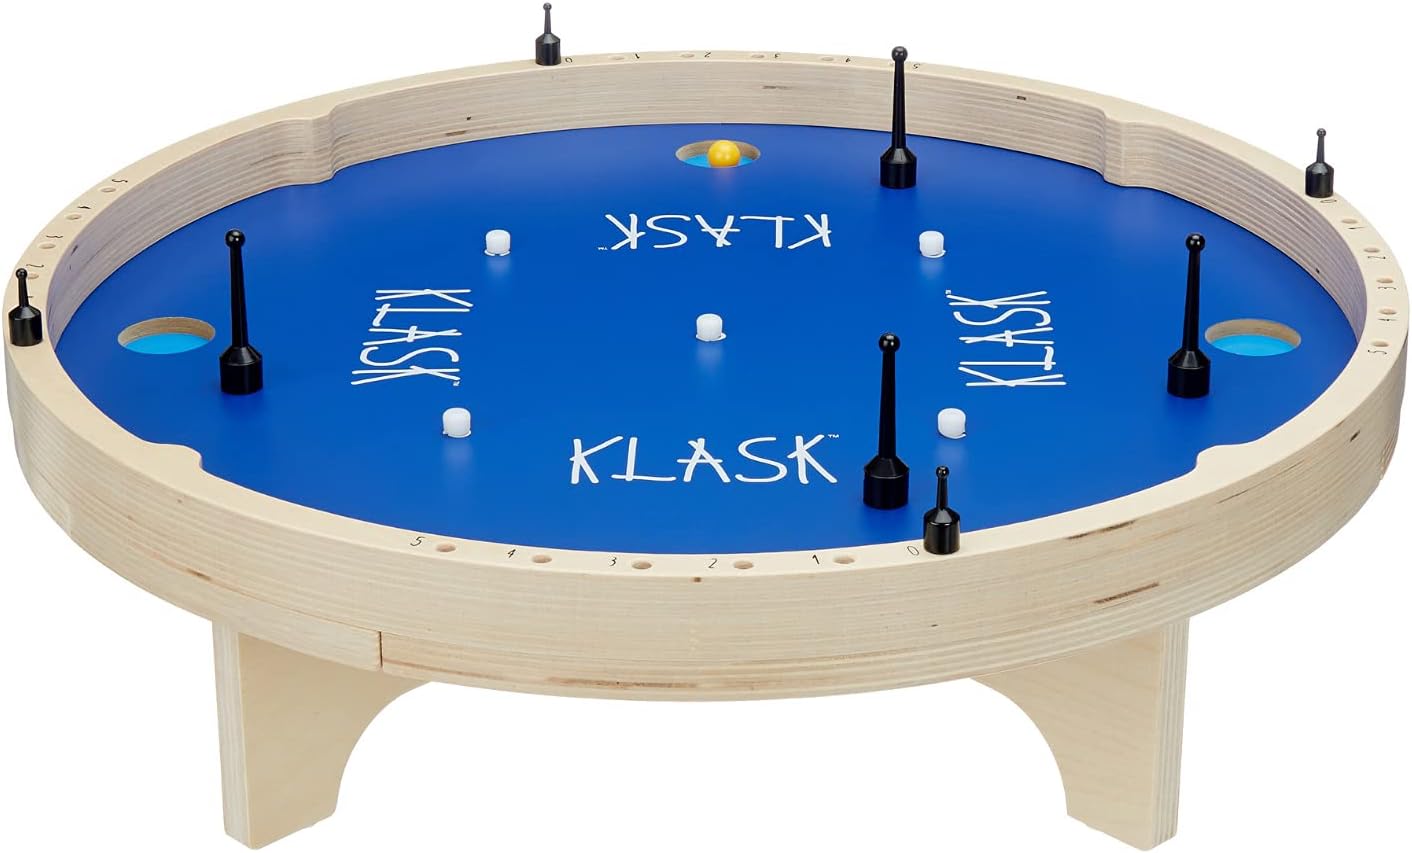 Klask 4 tabletop fun for four players.